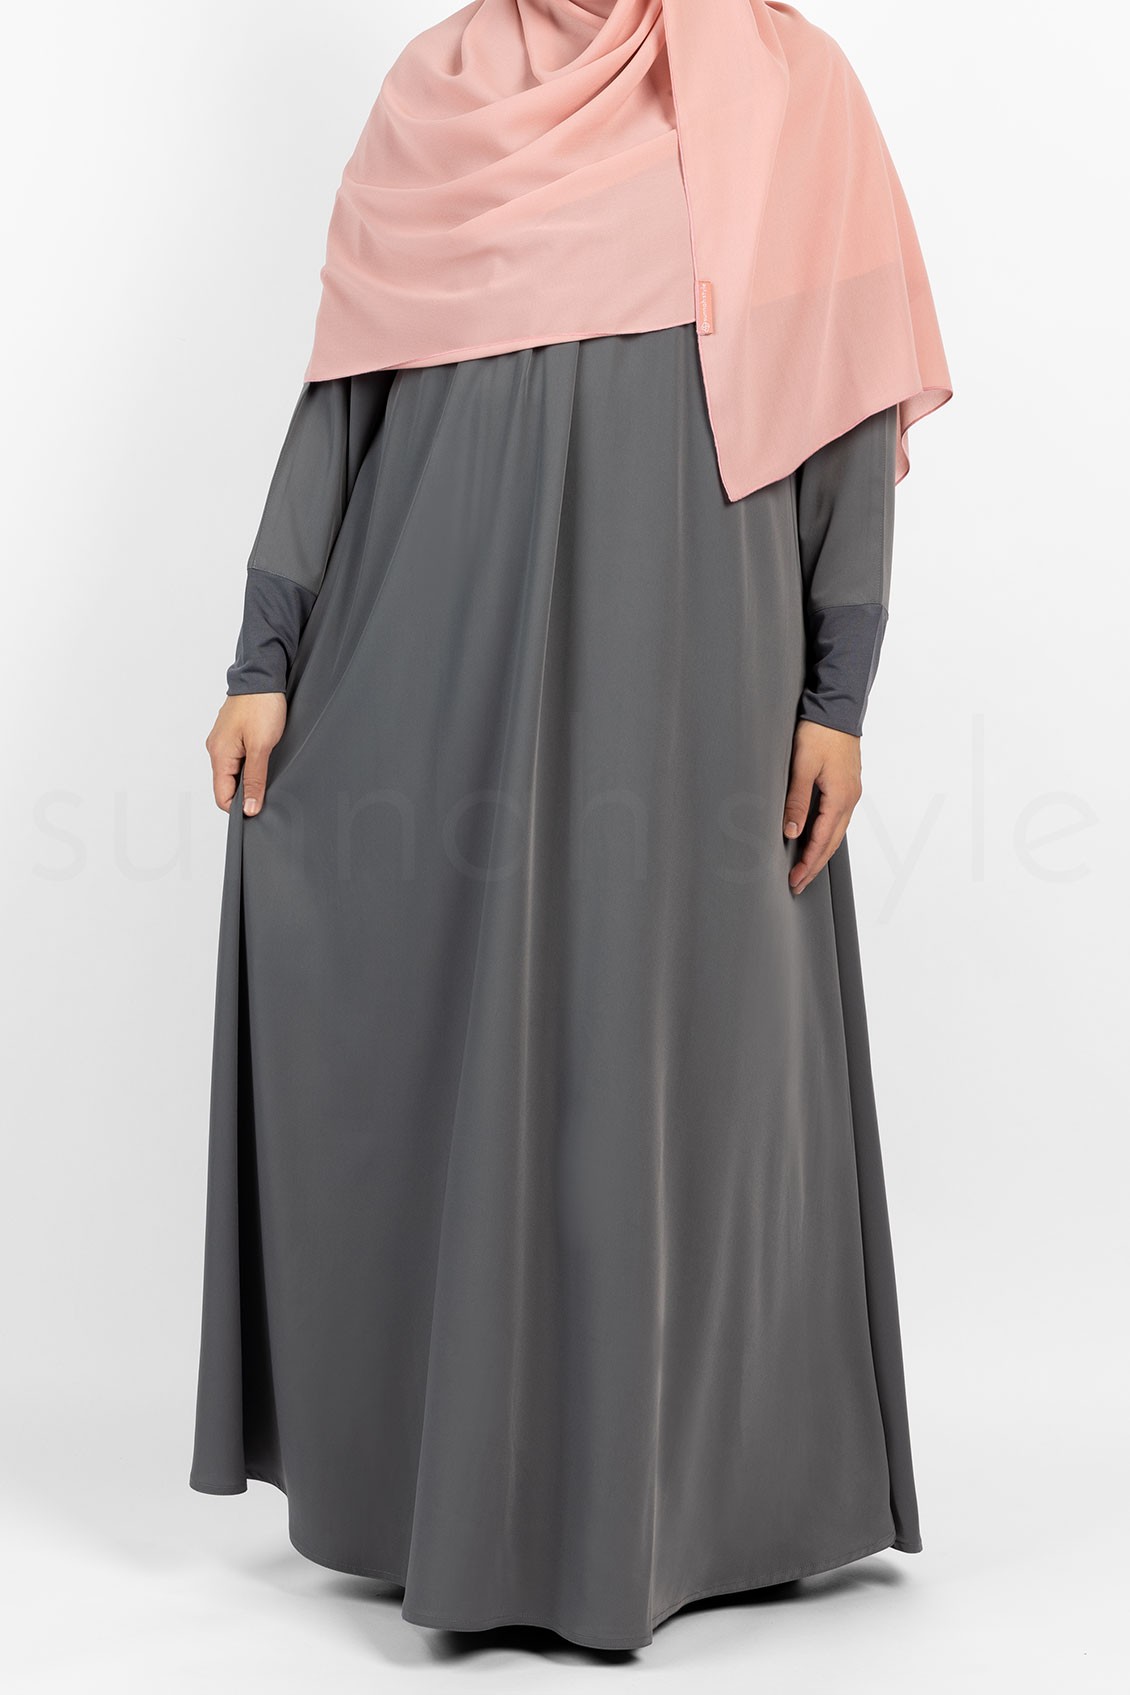 Sunnah Style Simplicity Umbrella Abaya Pewter Grey